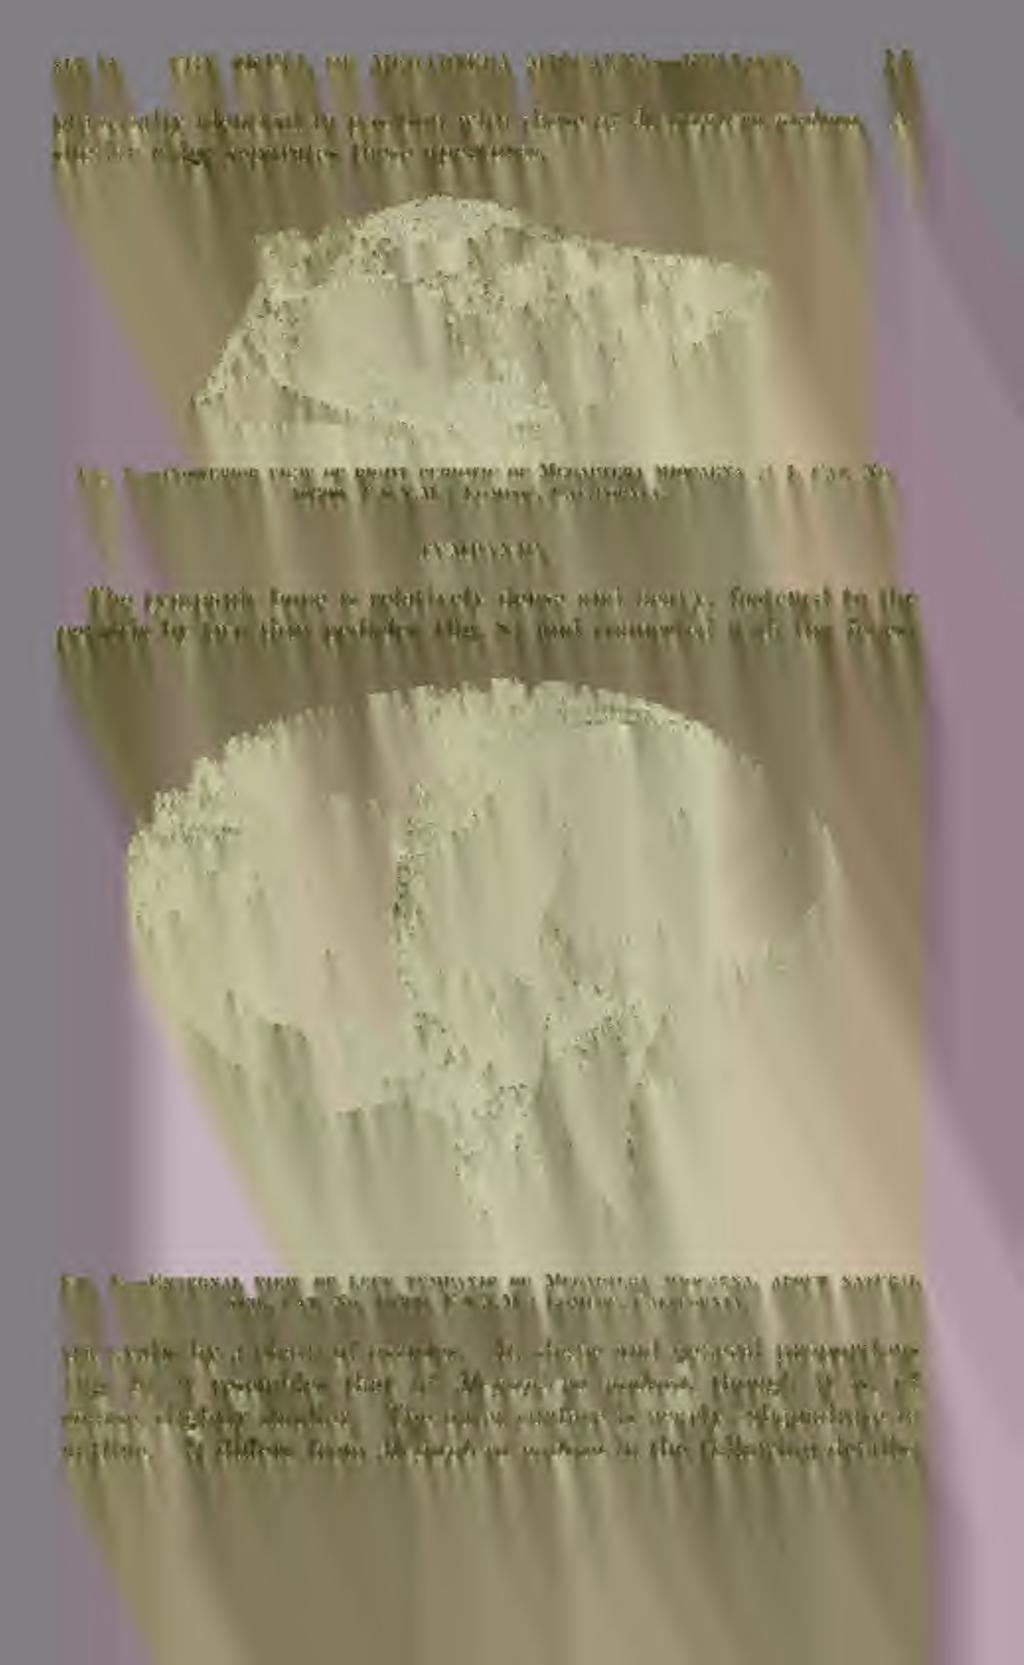 POSTEEIOE VIEW OF RIGHT PERIOTIC OF MeGAPTERA MIOCAENA X 1, CAT. NO. 10300, U.S.N.M. ; Lompoc, California. TYMPANIC.